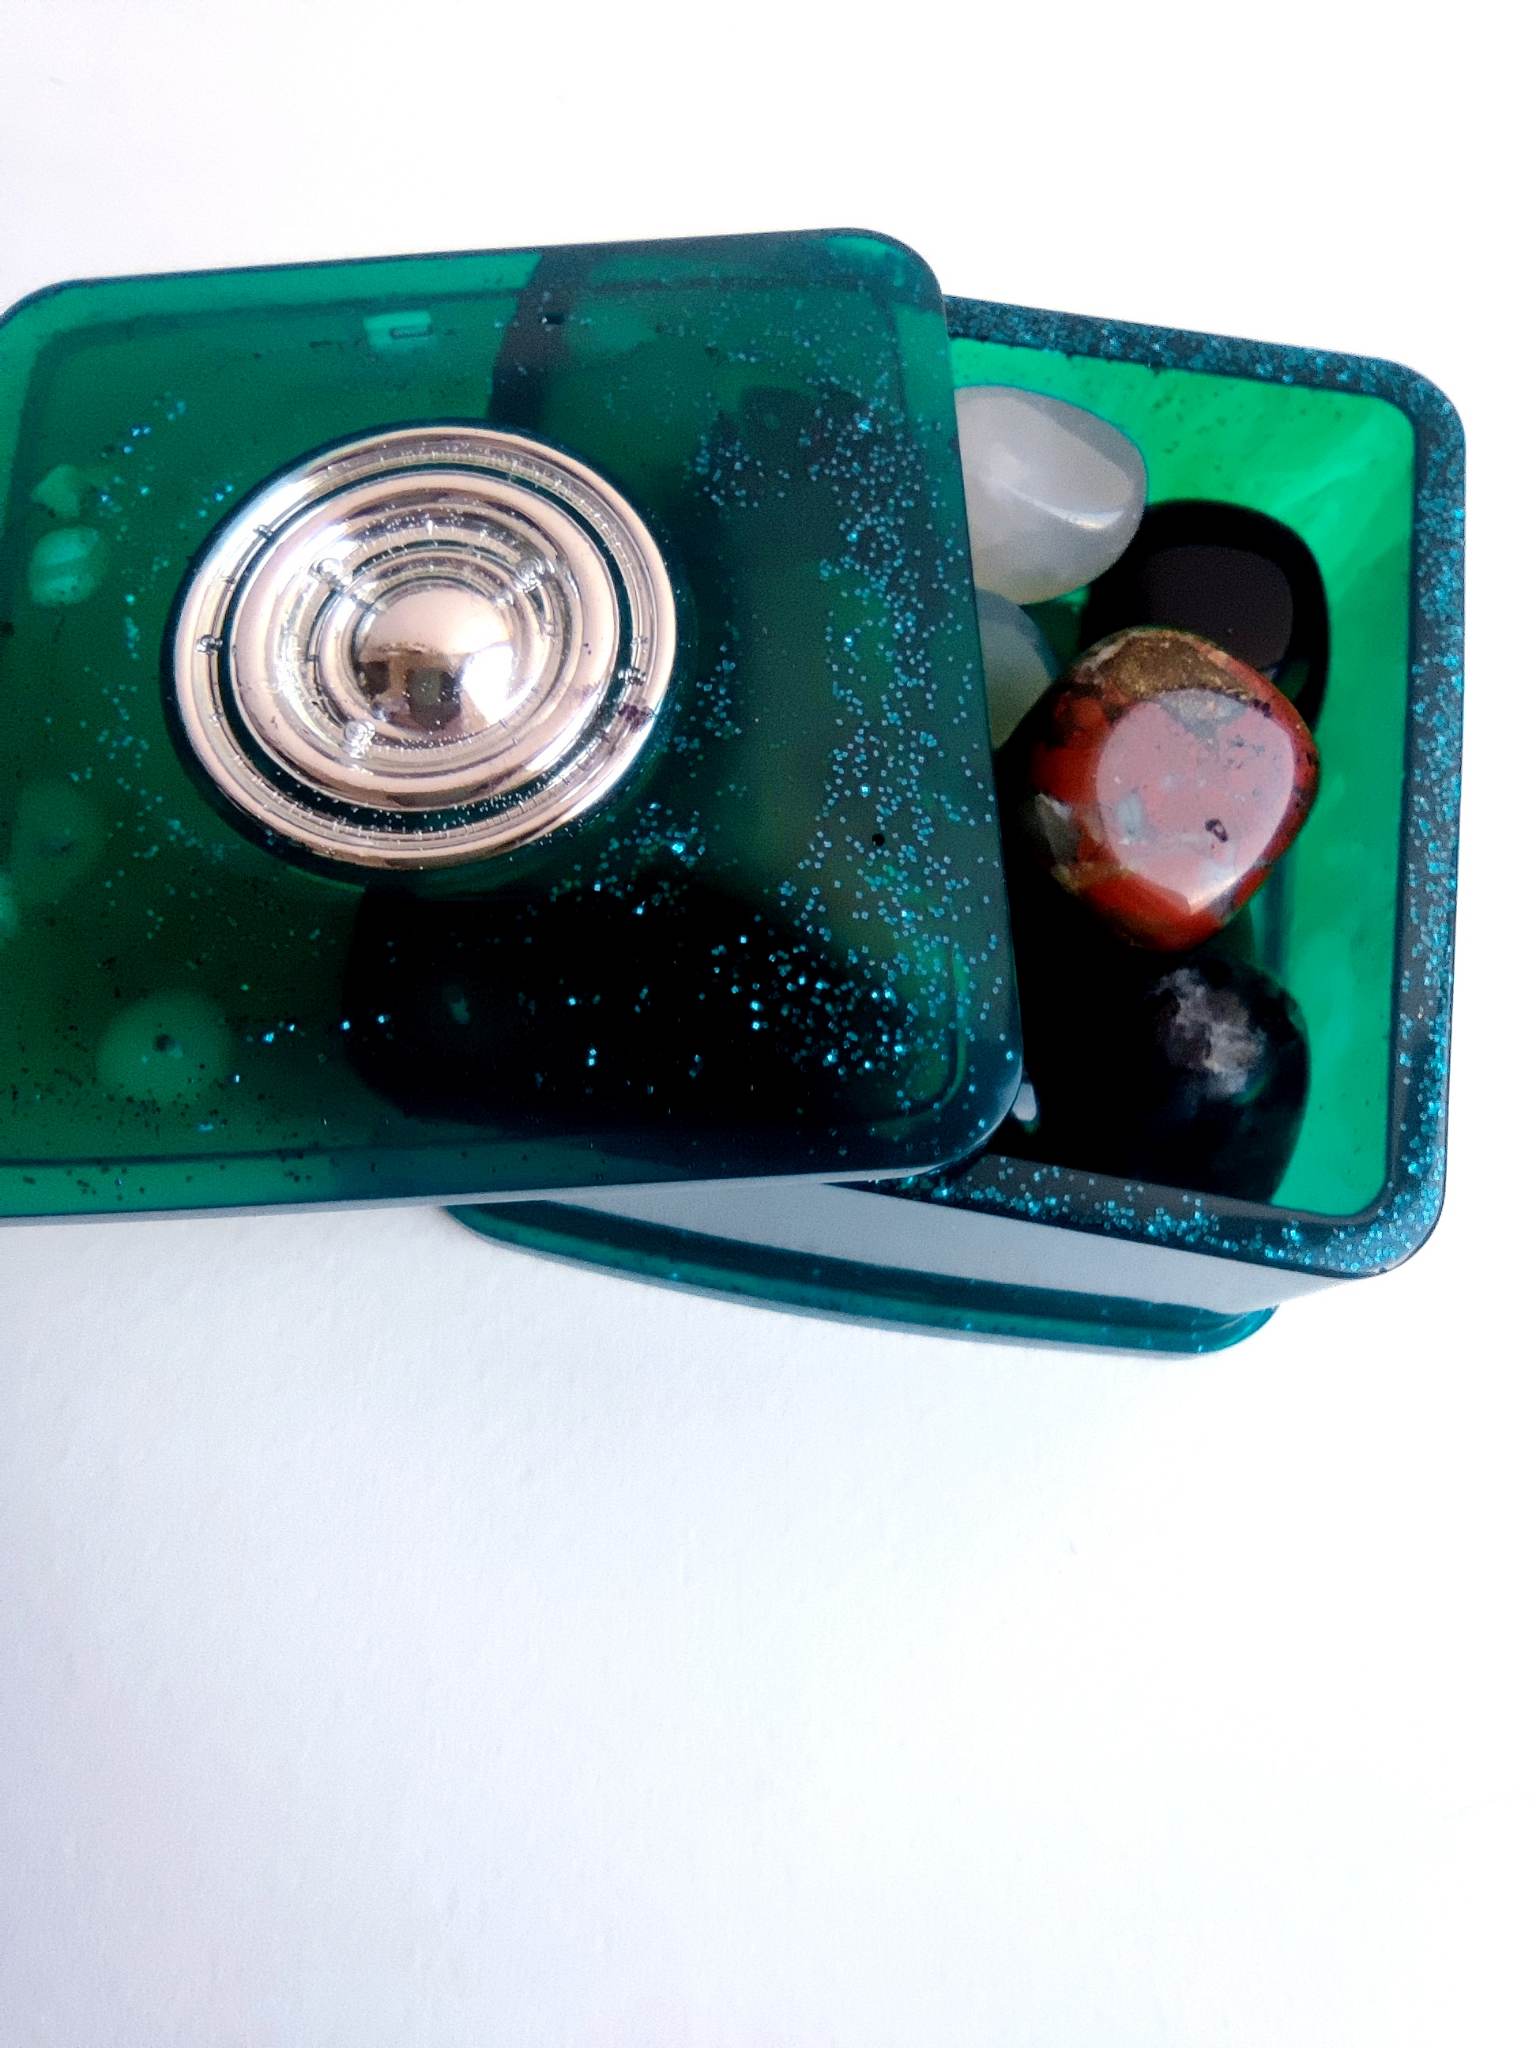 Orgonite box for storing semi-precious stones, runes, and magical jewelry - Green magic